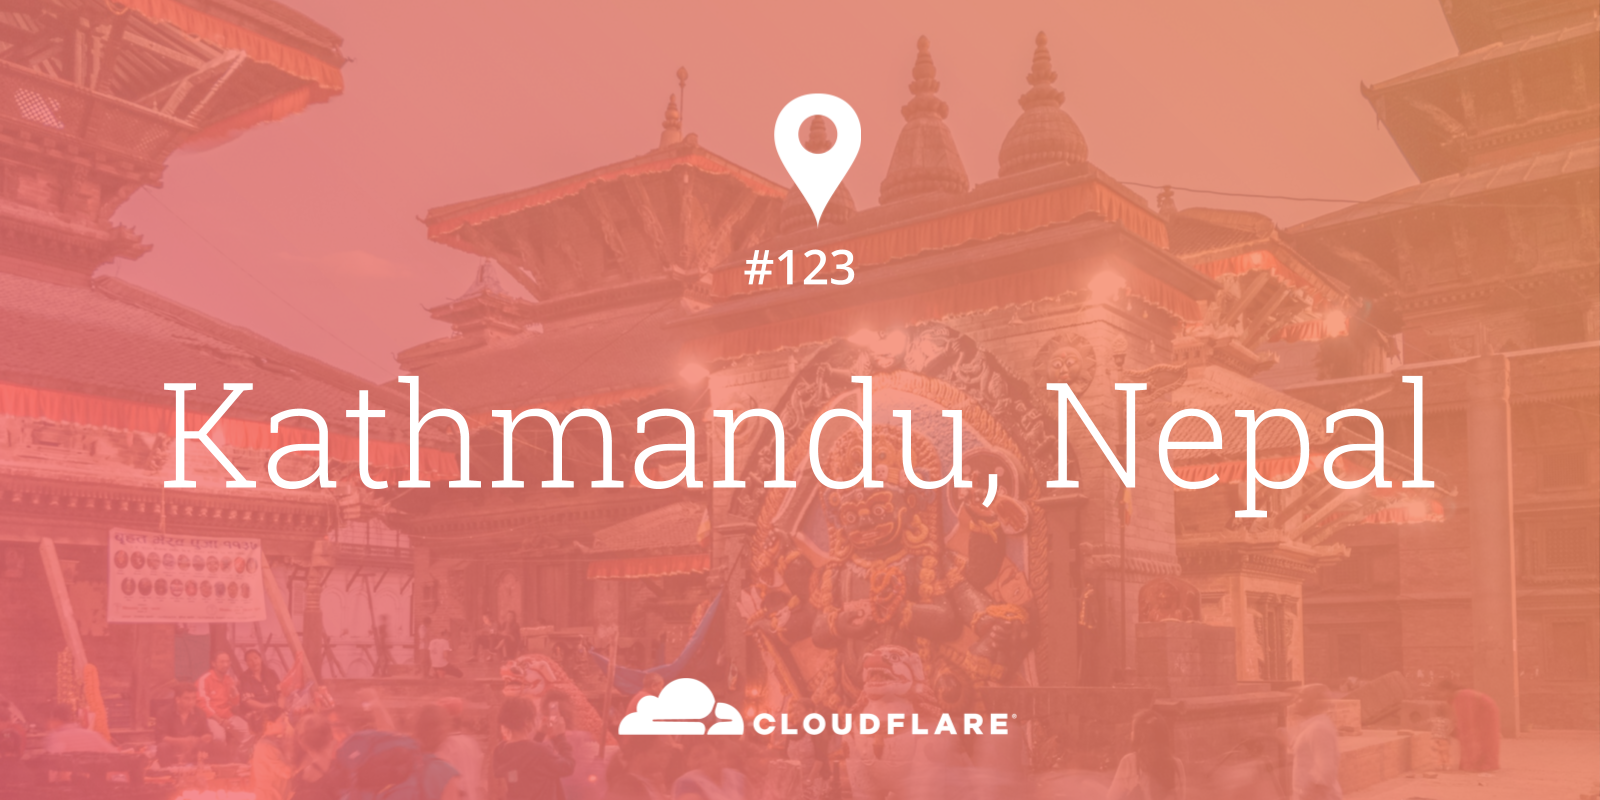 Kathmandu, Nepal is data center 123